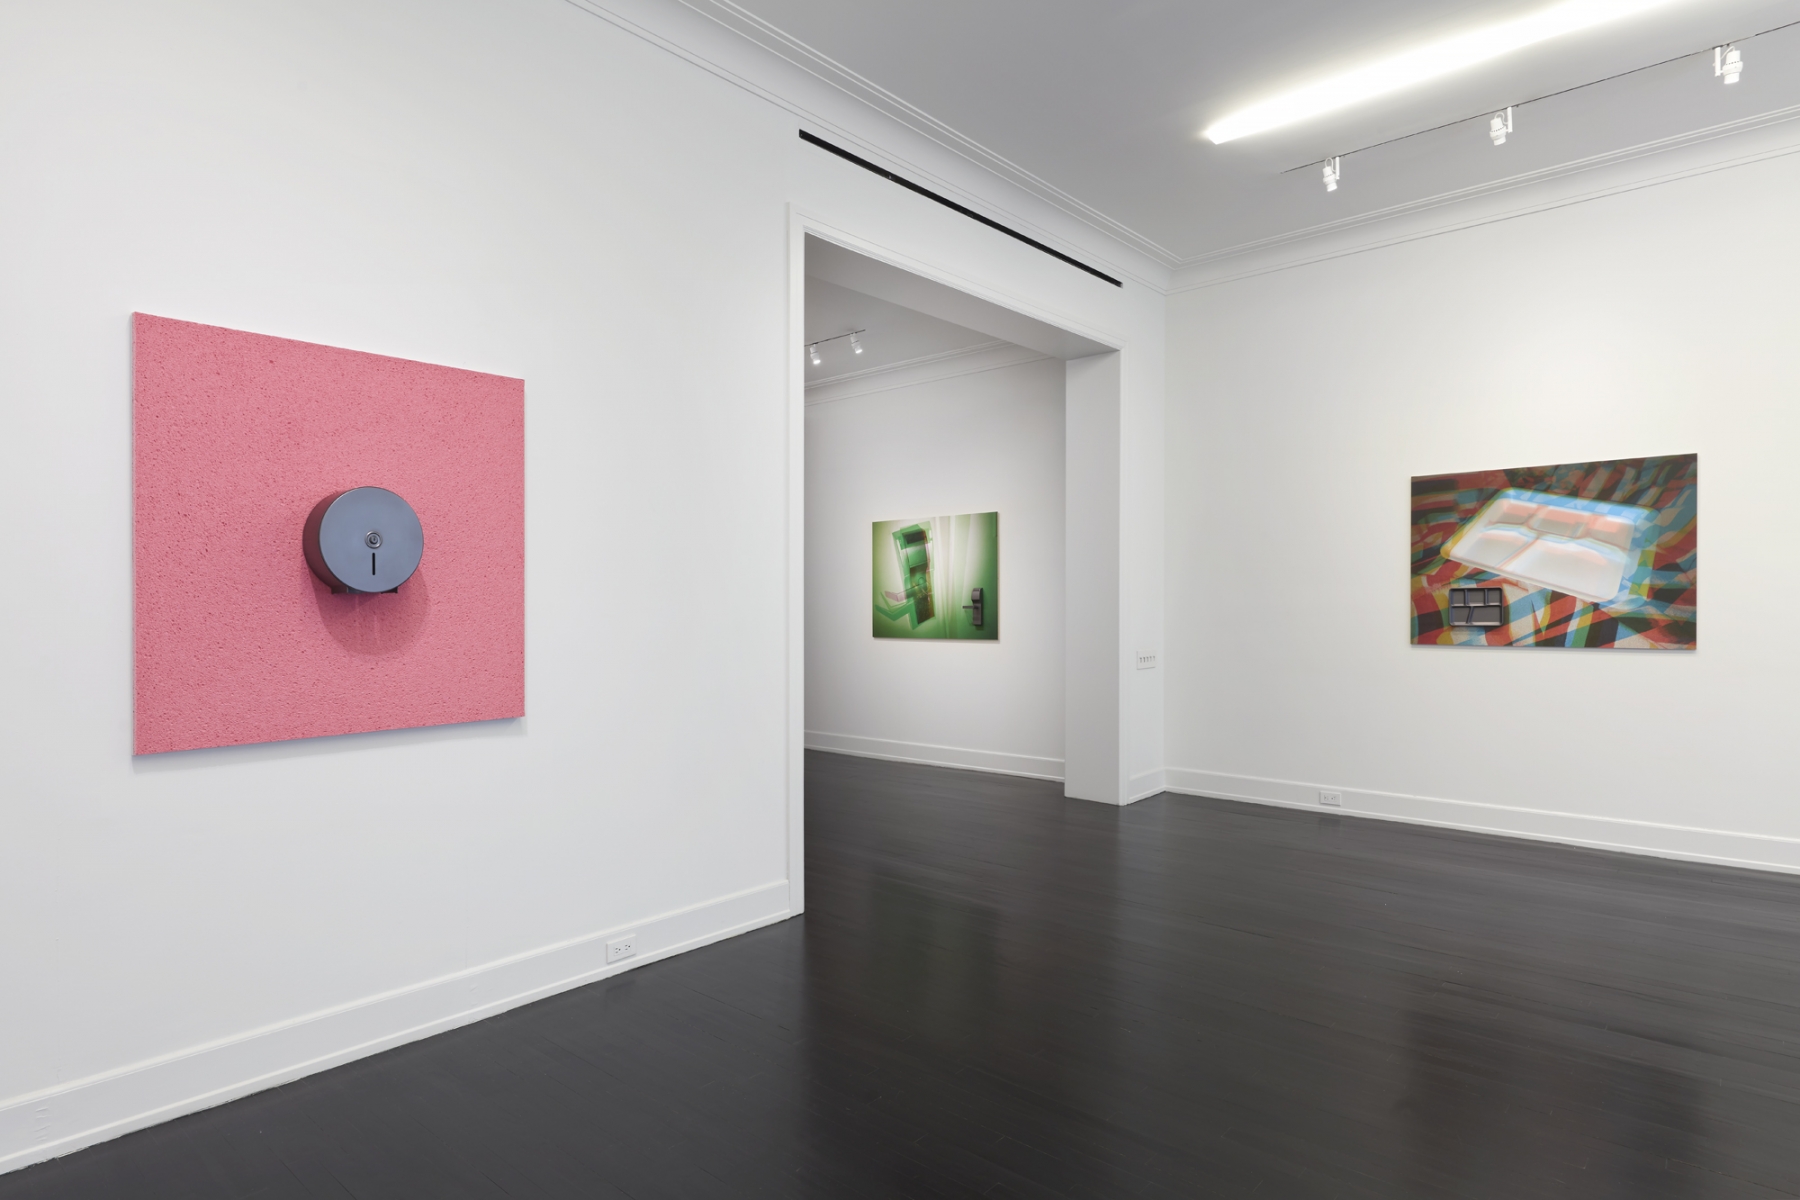 Adam McEwen, Petzel Gallery, 2019

Installation view